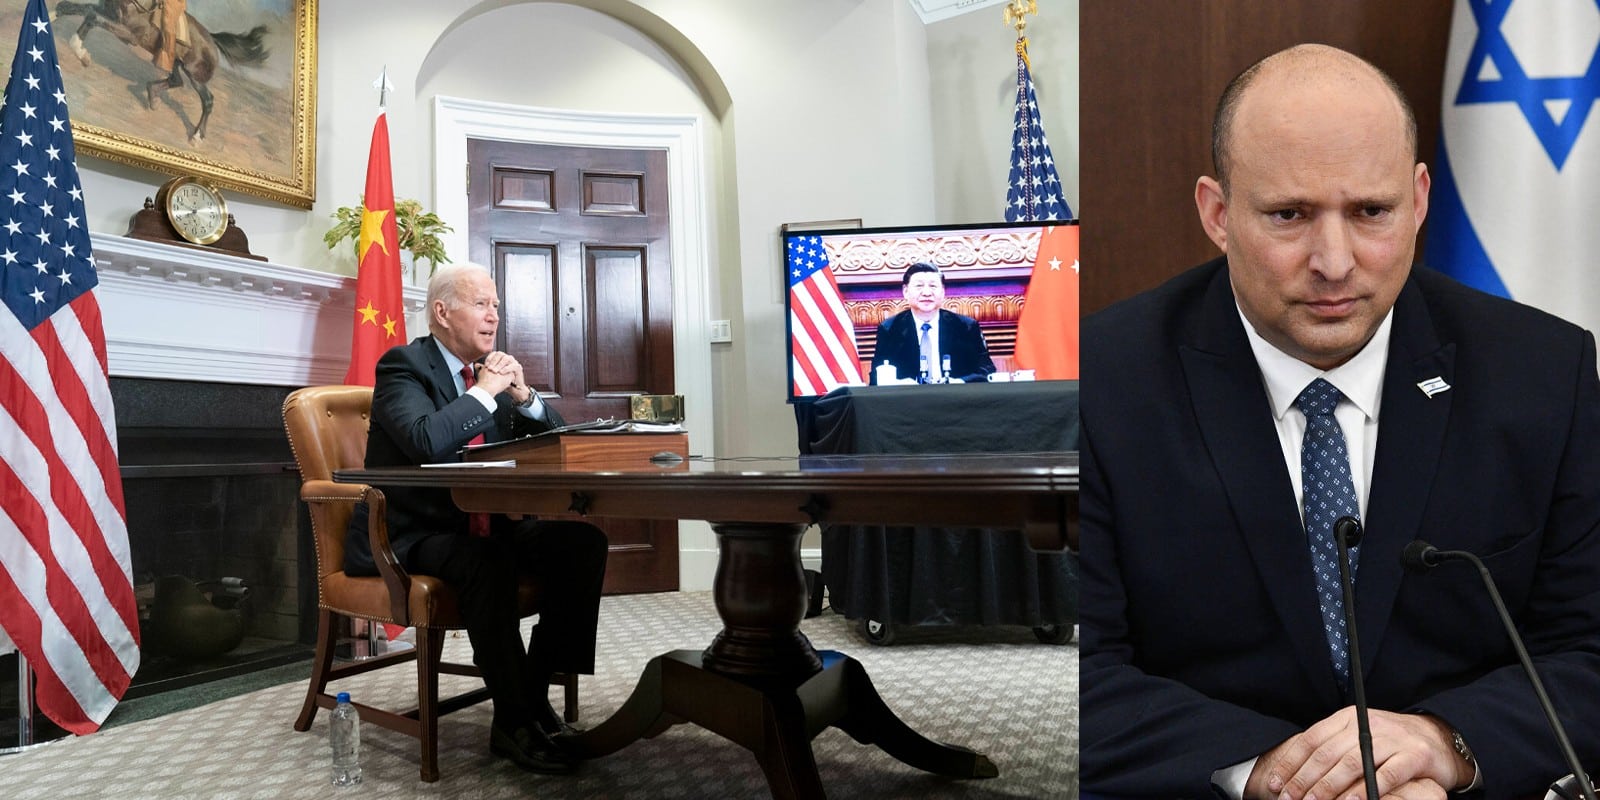 BIDEN speaks during a virtual summit with Chinese President Xi Jinping, Israeli Prime Minister Naftali Bennett